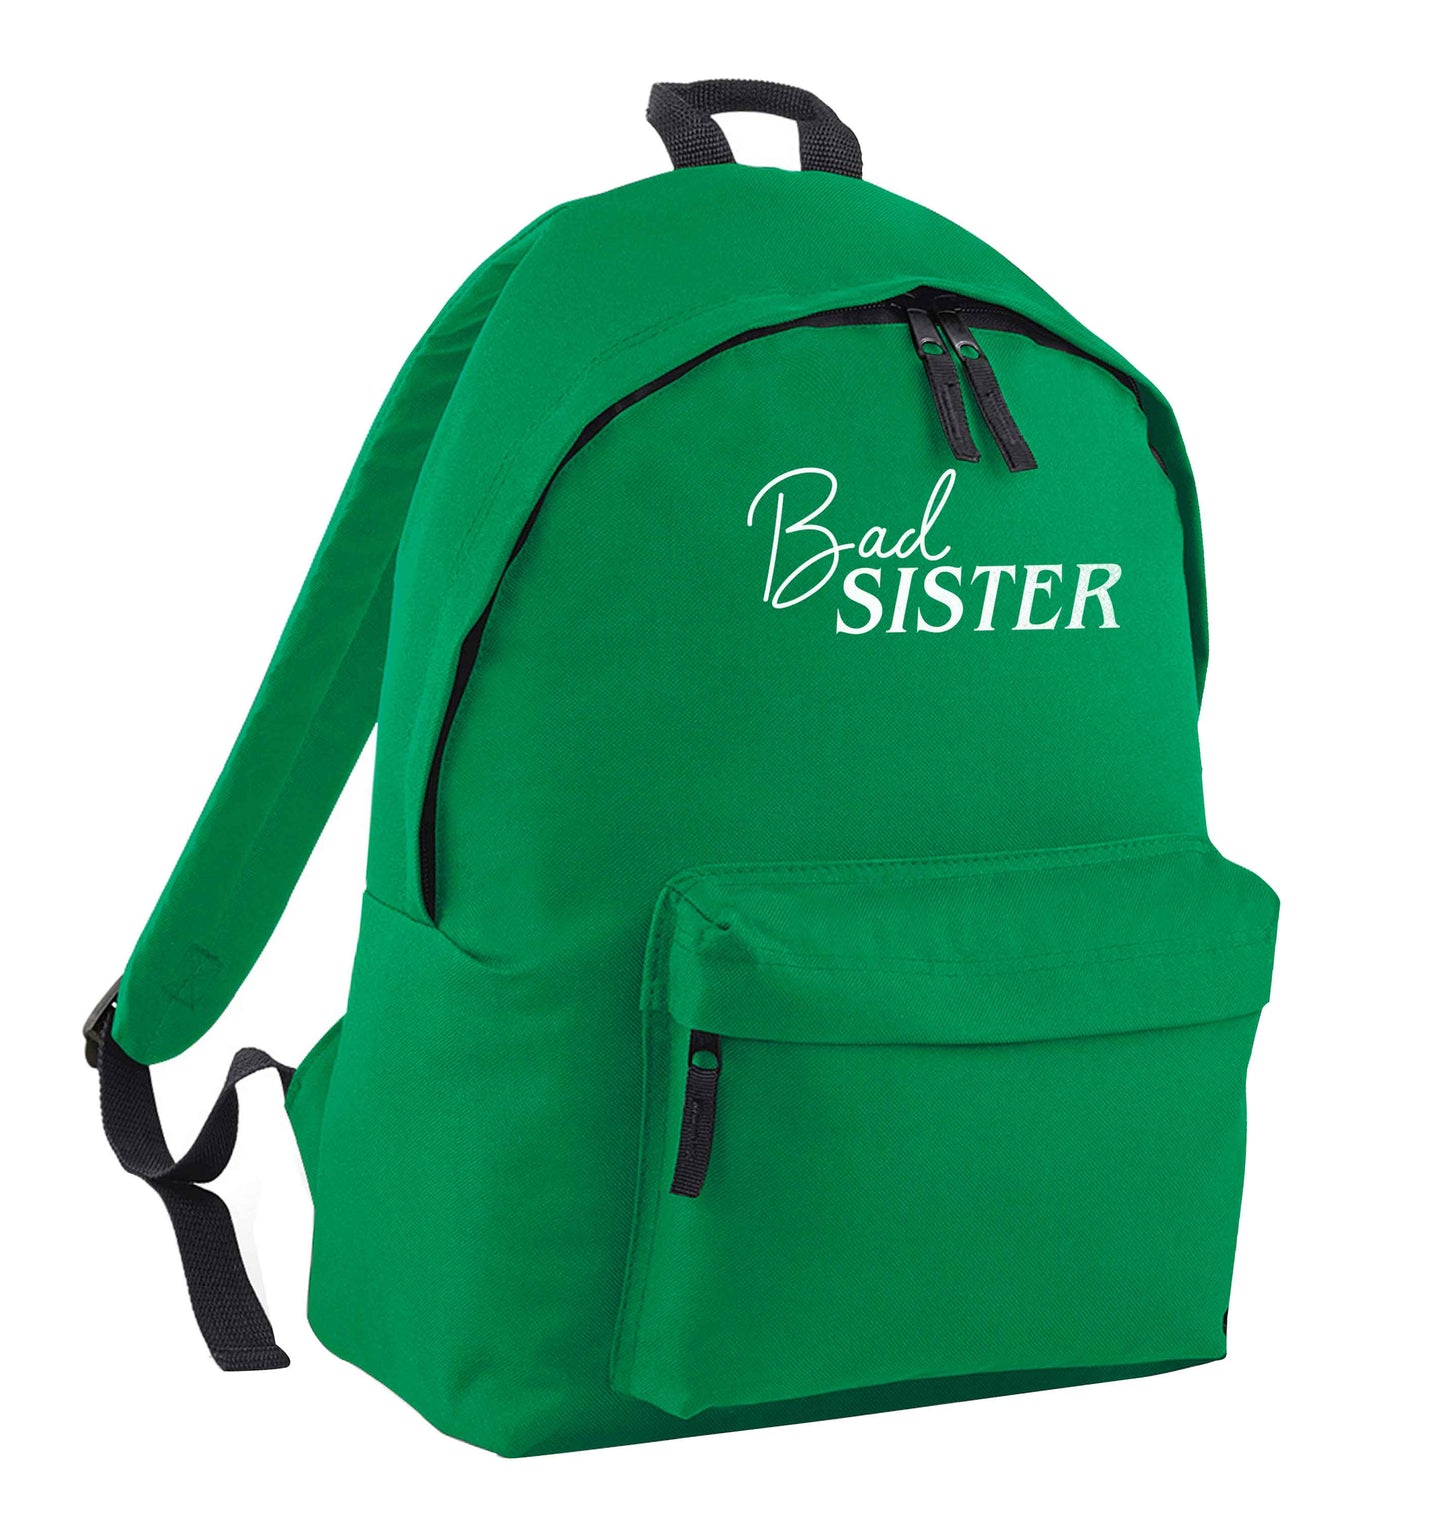 Bad sister green adults backpack